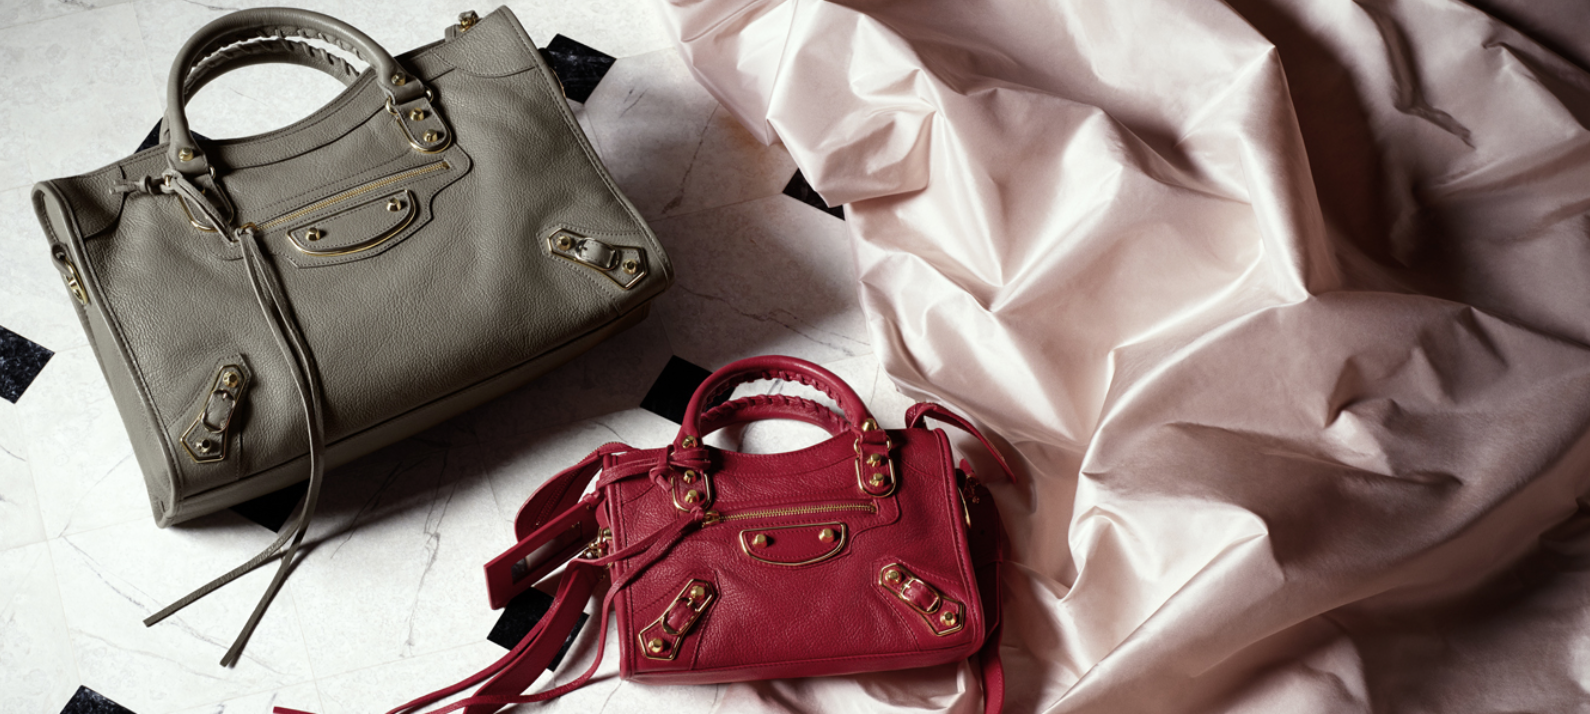 Newsflash: Balenciaga To Make Changes To Bag Design